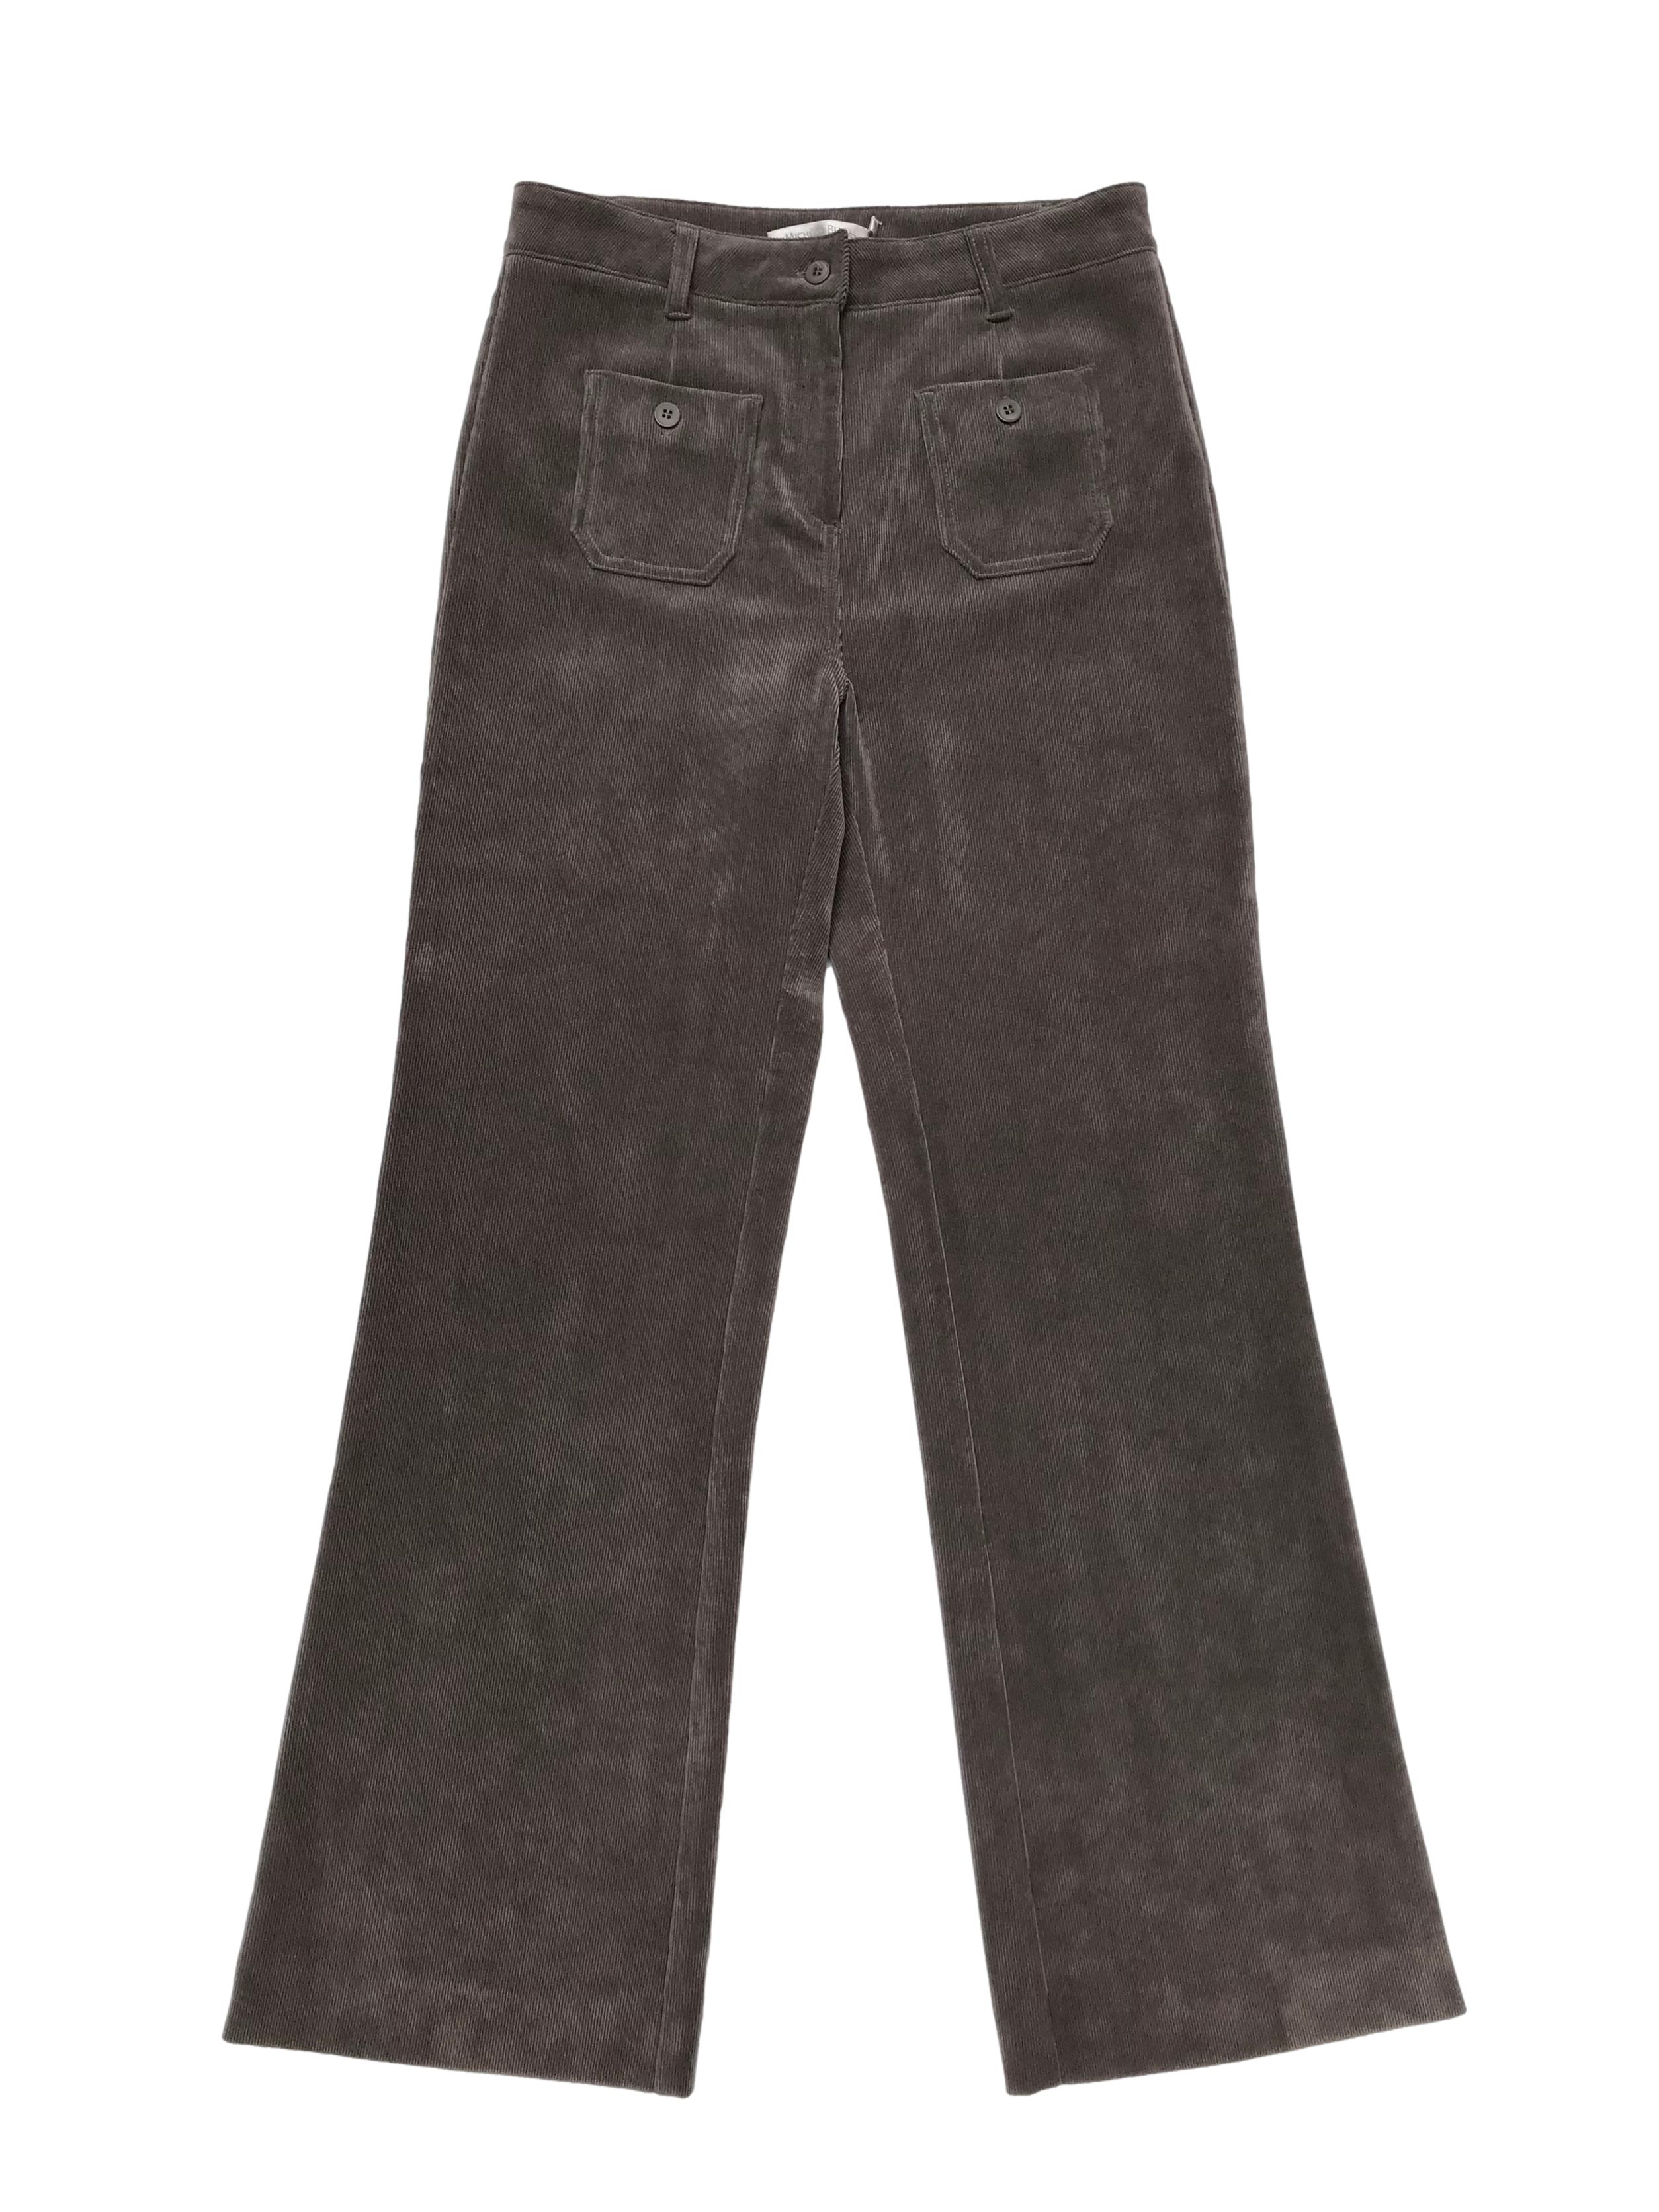 Pantalón Michelle Belau de corduroy en tono cemento efecto tornasol, basta semicampana. Cintura 75cm Largo 105cm